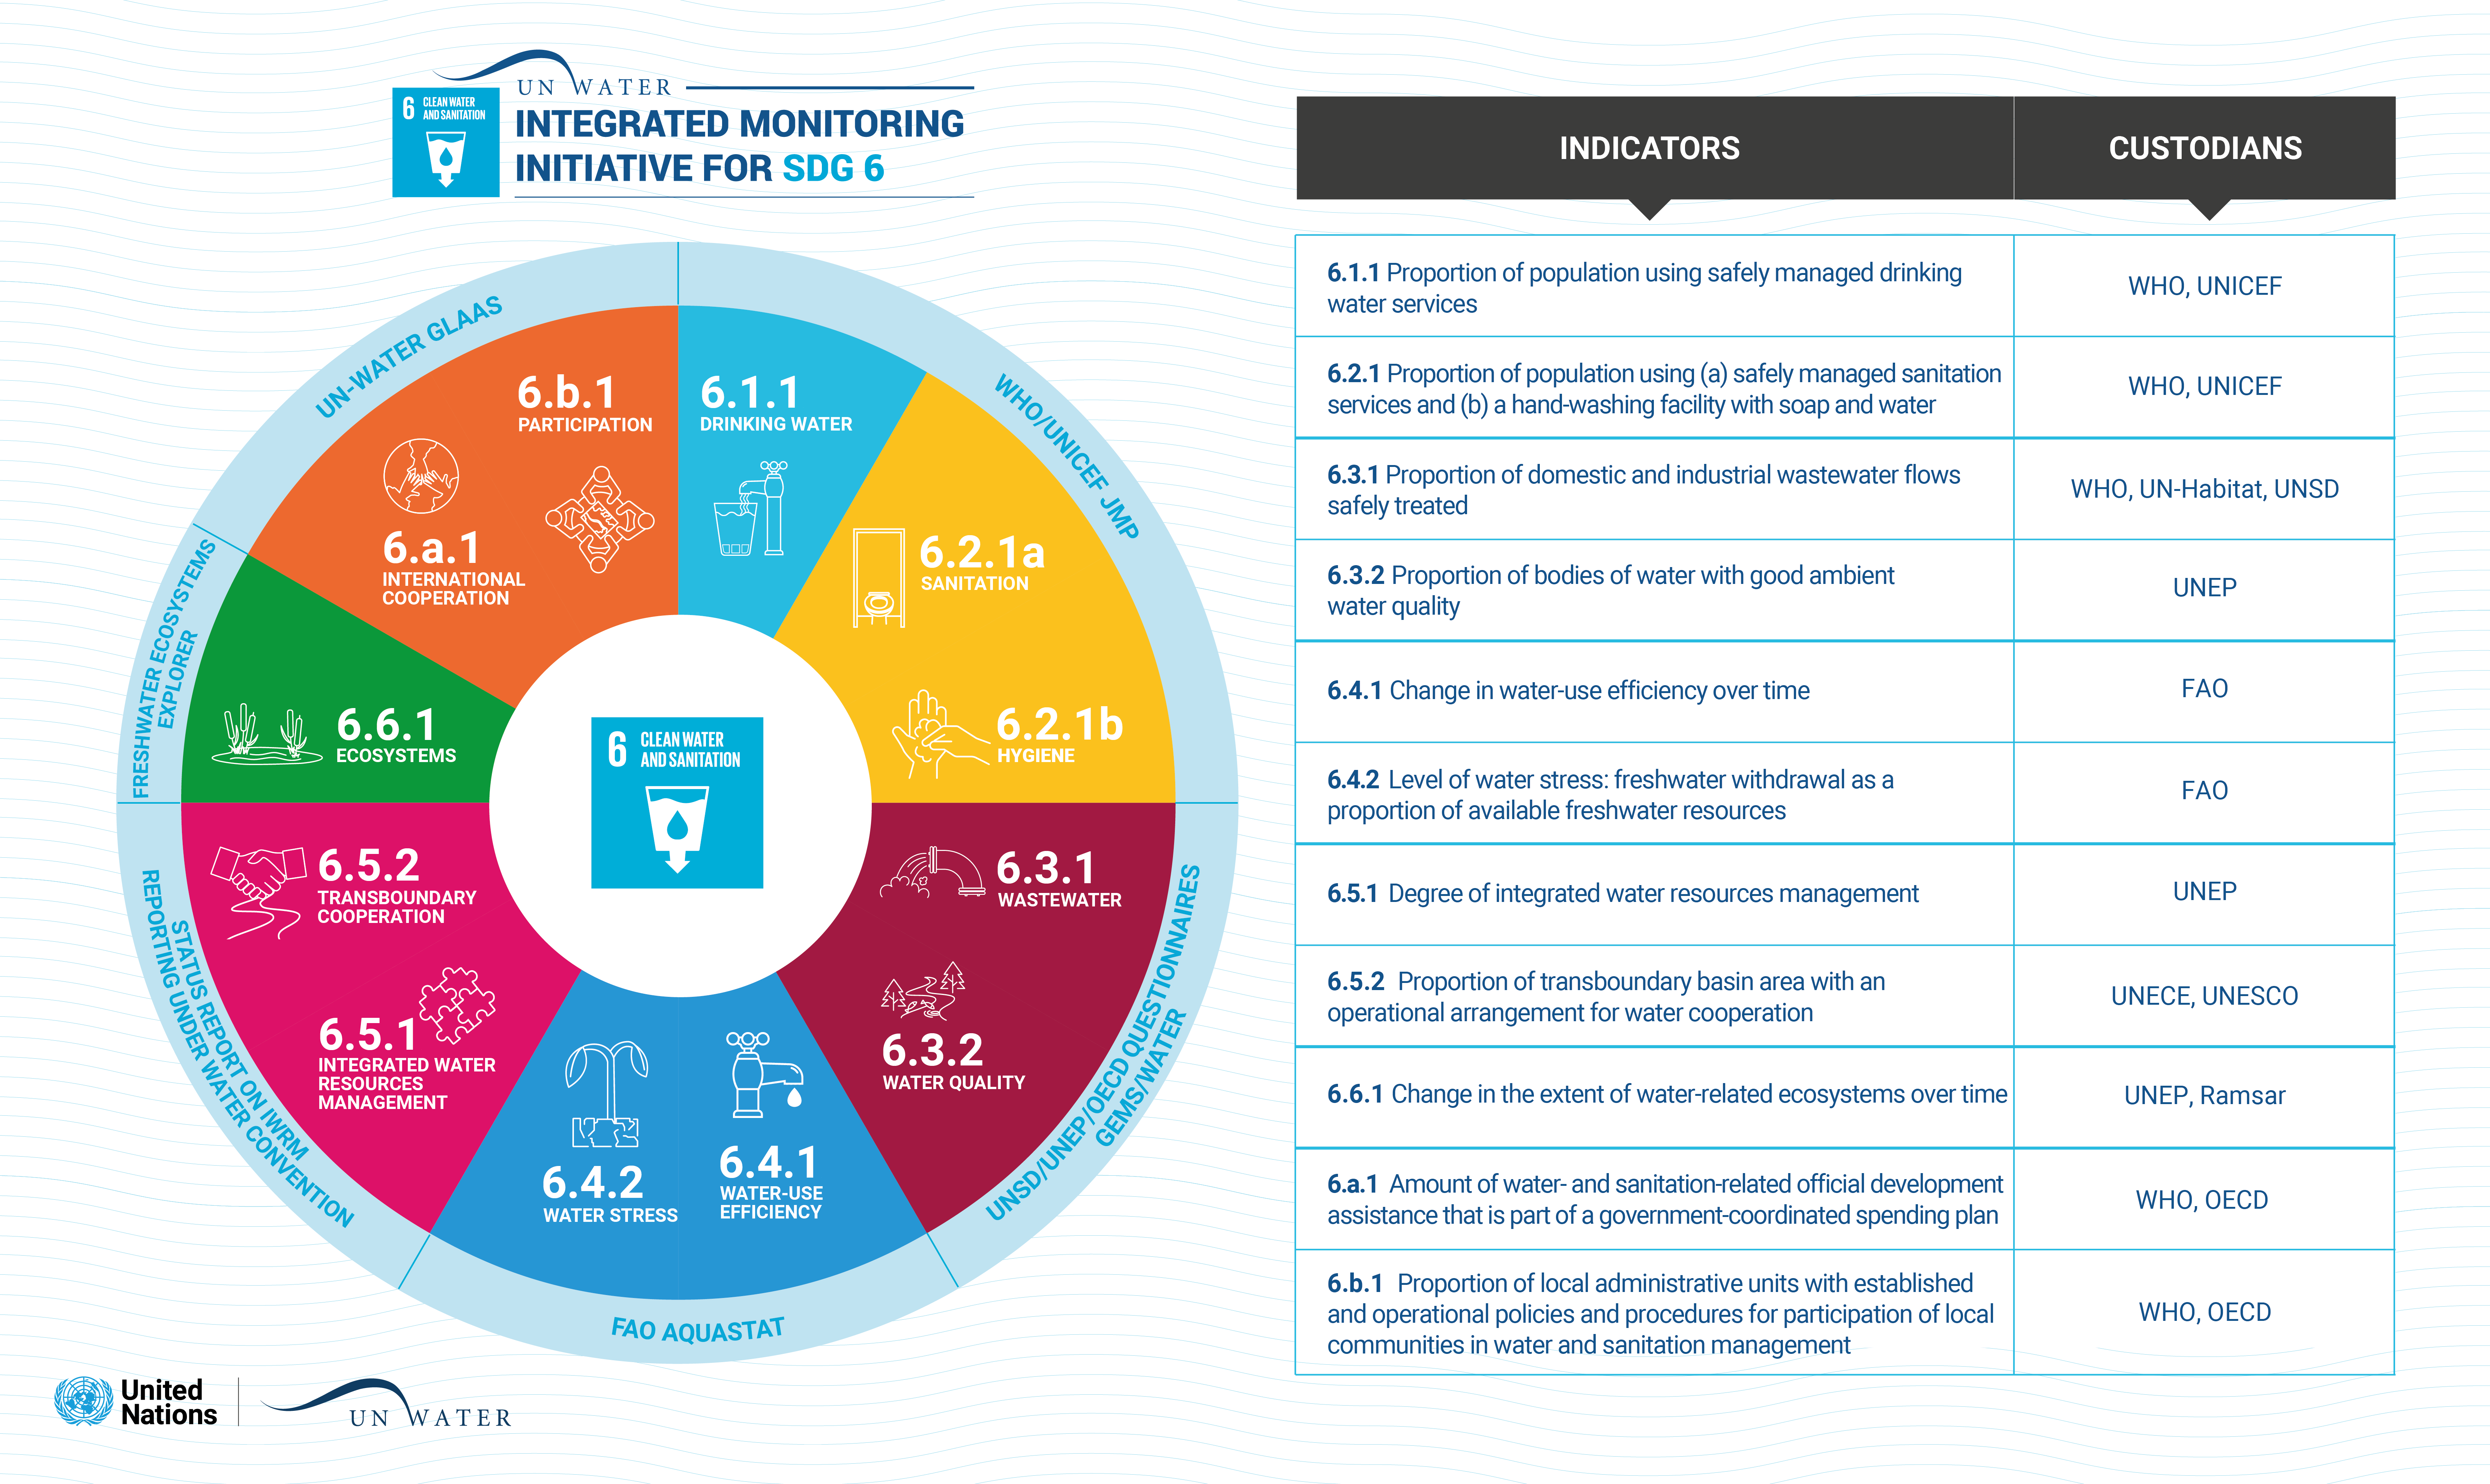 IMI-SDG6 and the SDG 6 global indicators